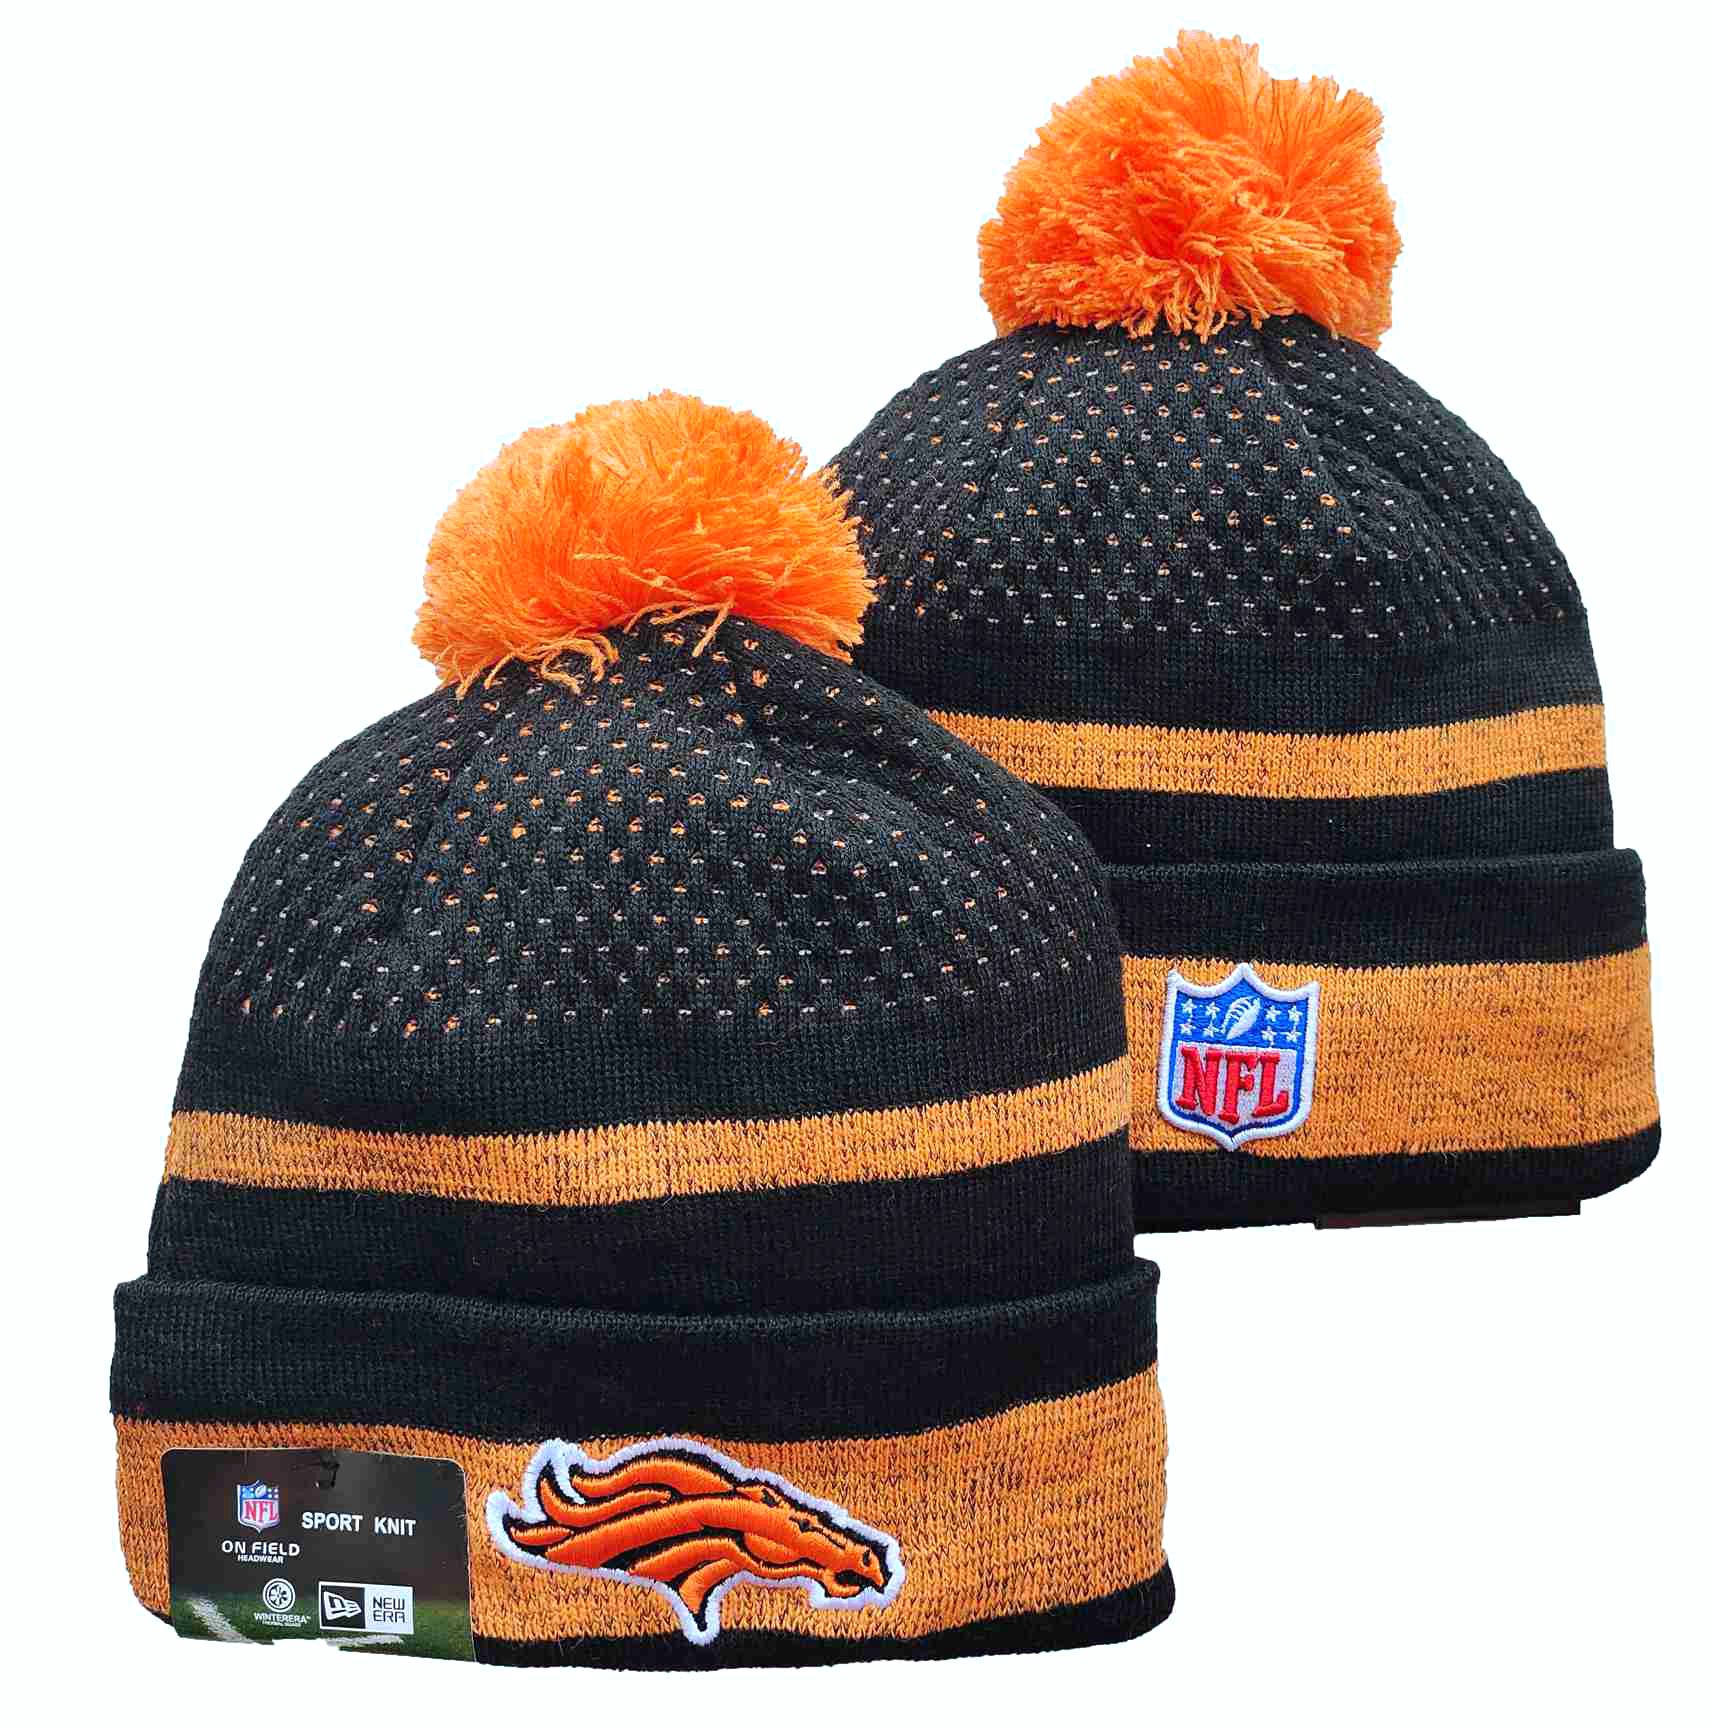 NFL Denver Broncos Beanies Knit Hats-YD931